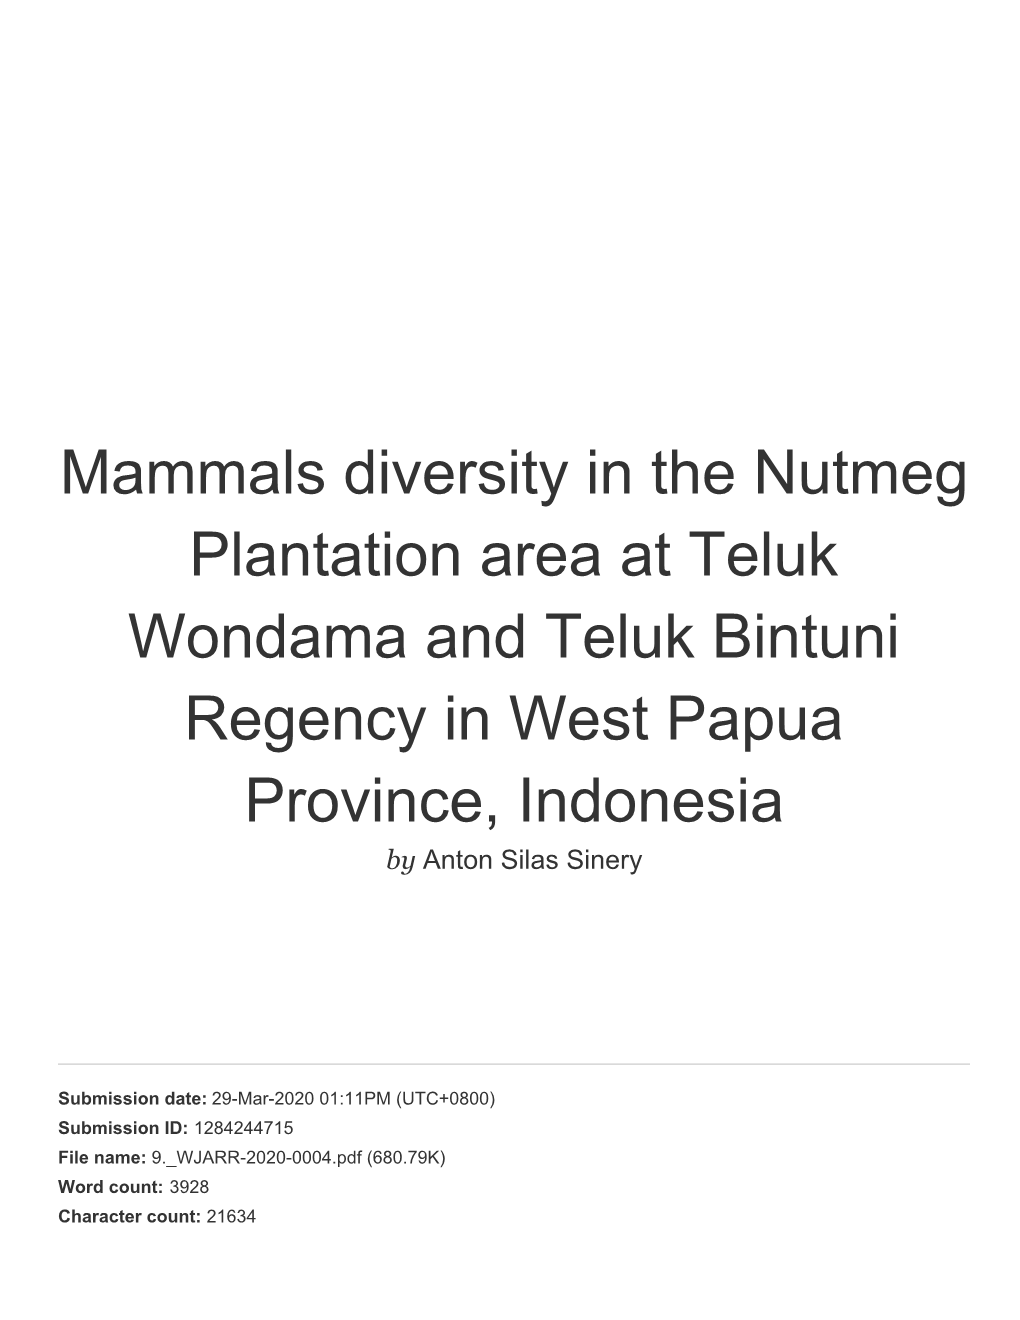 Mammals Diversity in the Nutmeg Plantation Area at Teluk Wondama and Teluk Bintuni Regency in West Papua Province, Indonesia by Anton Silas Sinery